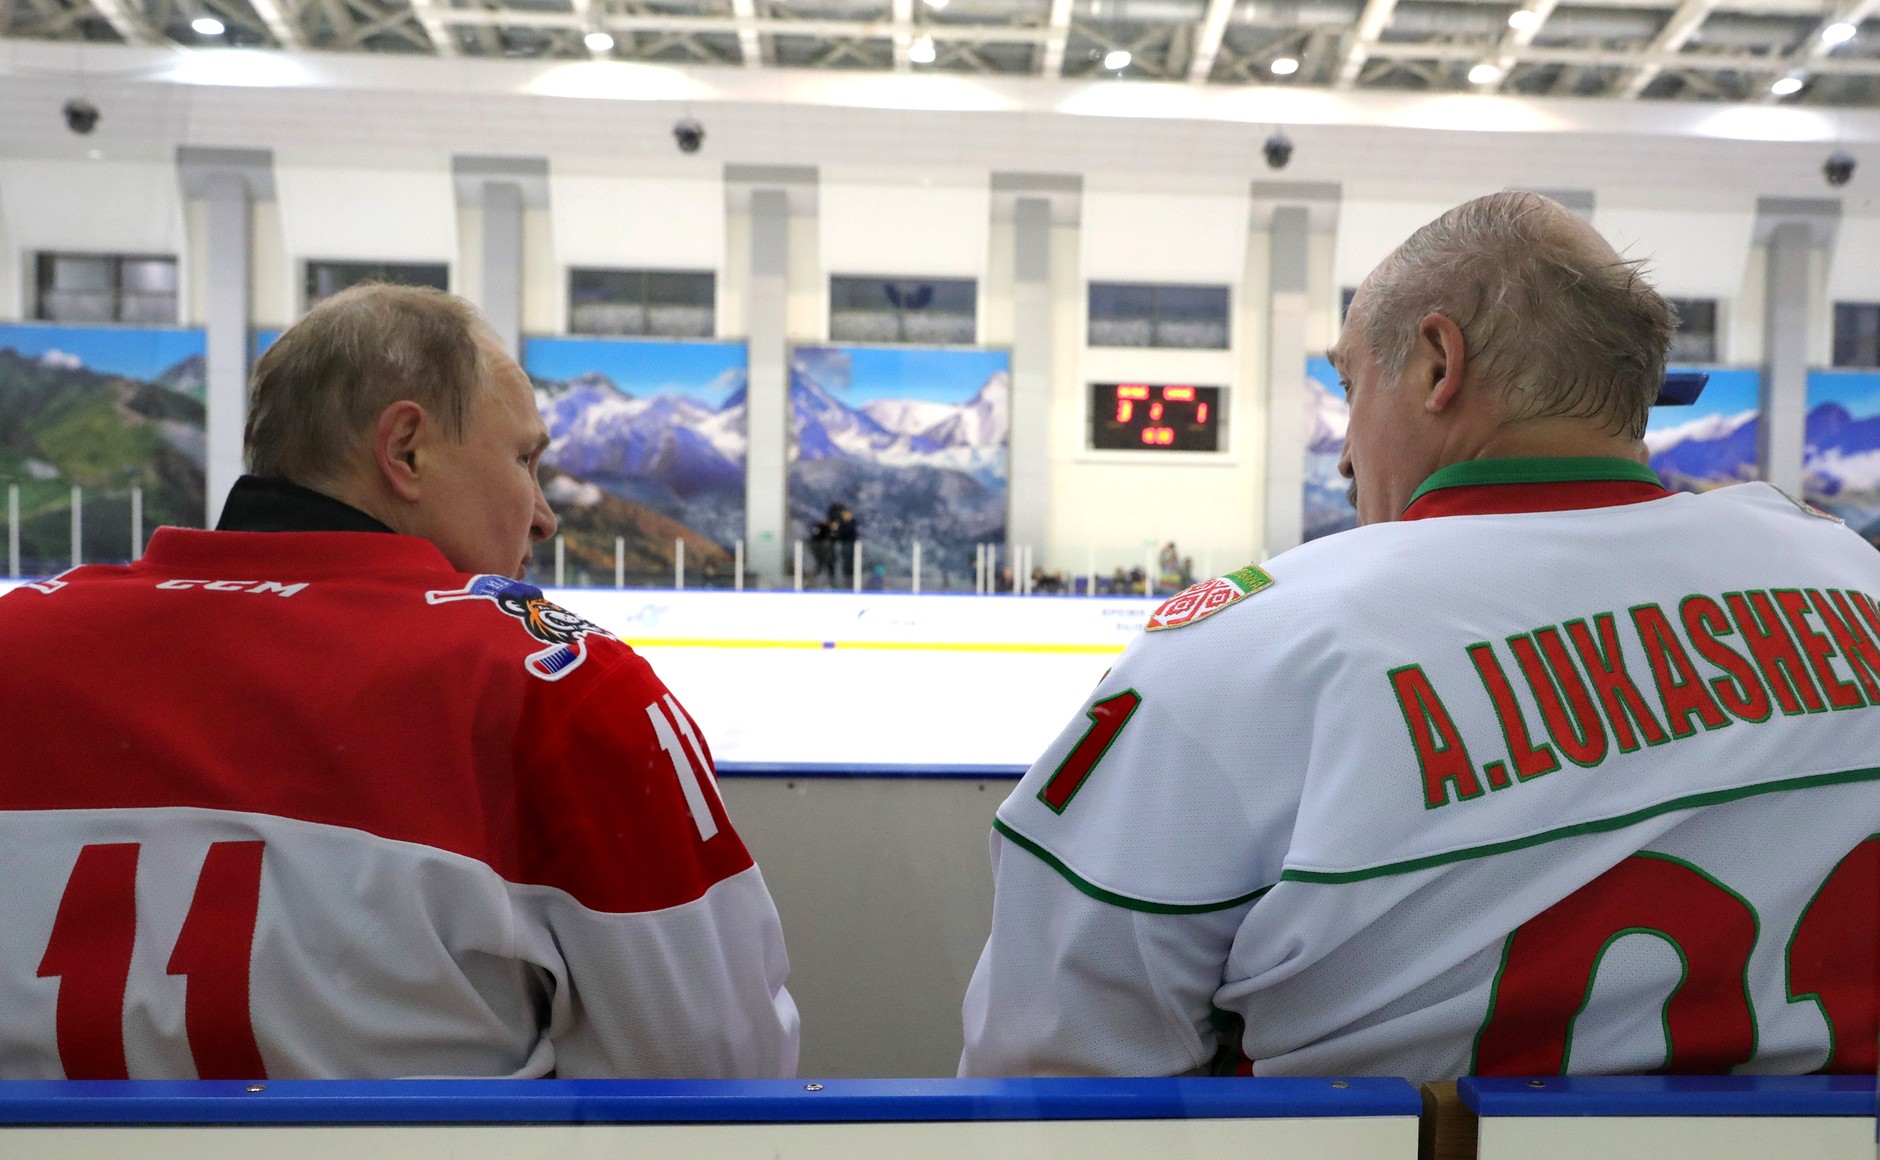 Aleksandr Łukaszenka i Władimir Putin na meczu hokeja. Fot. Kremlin.ru